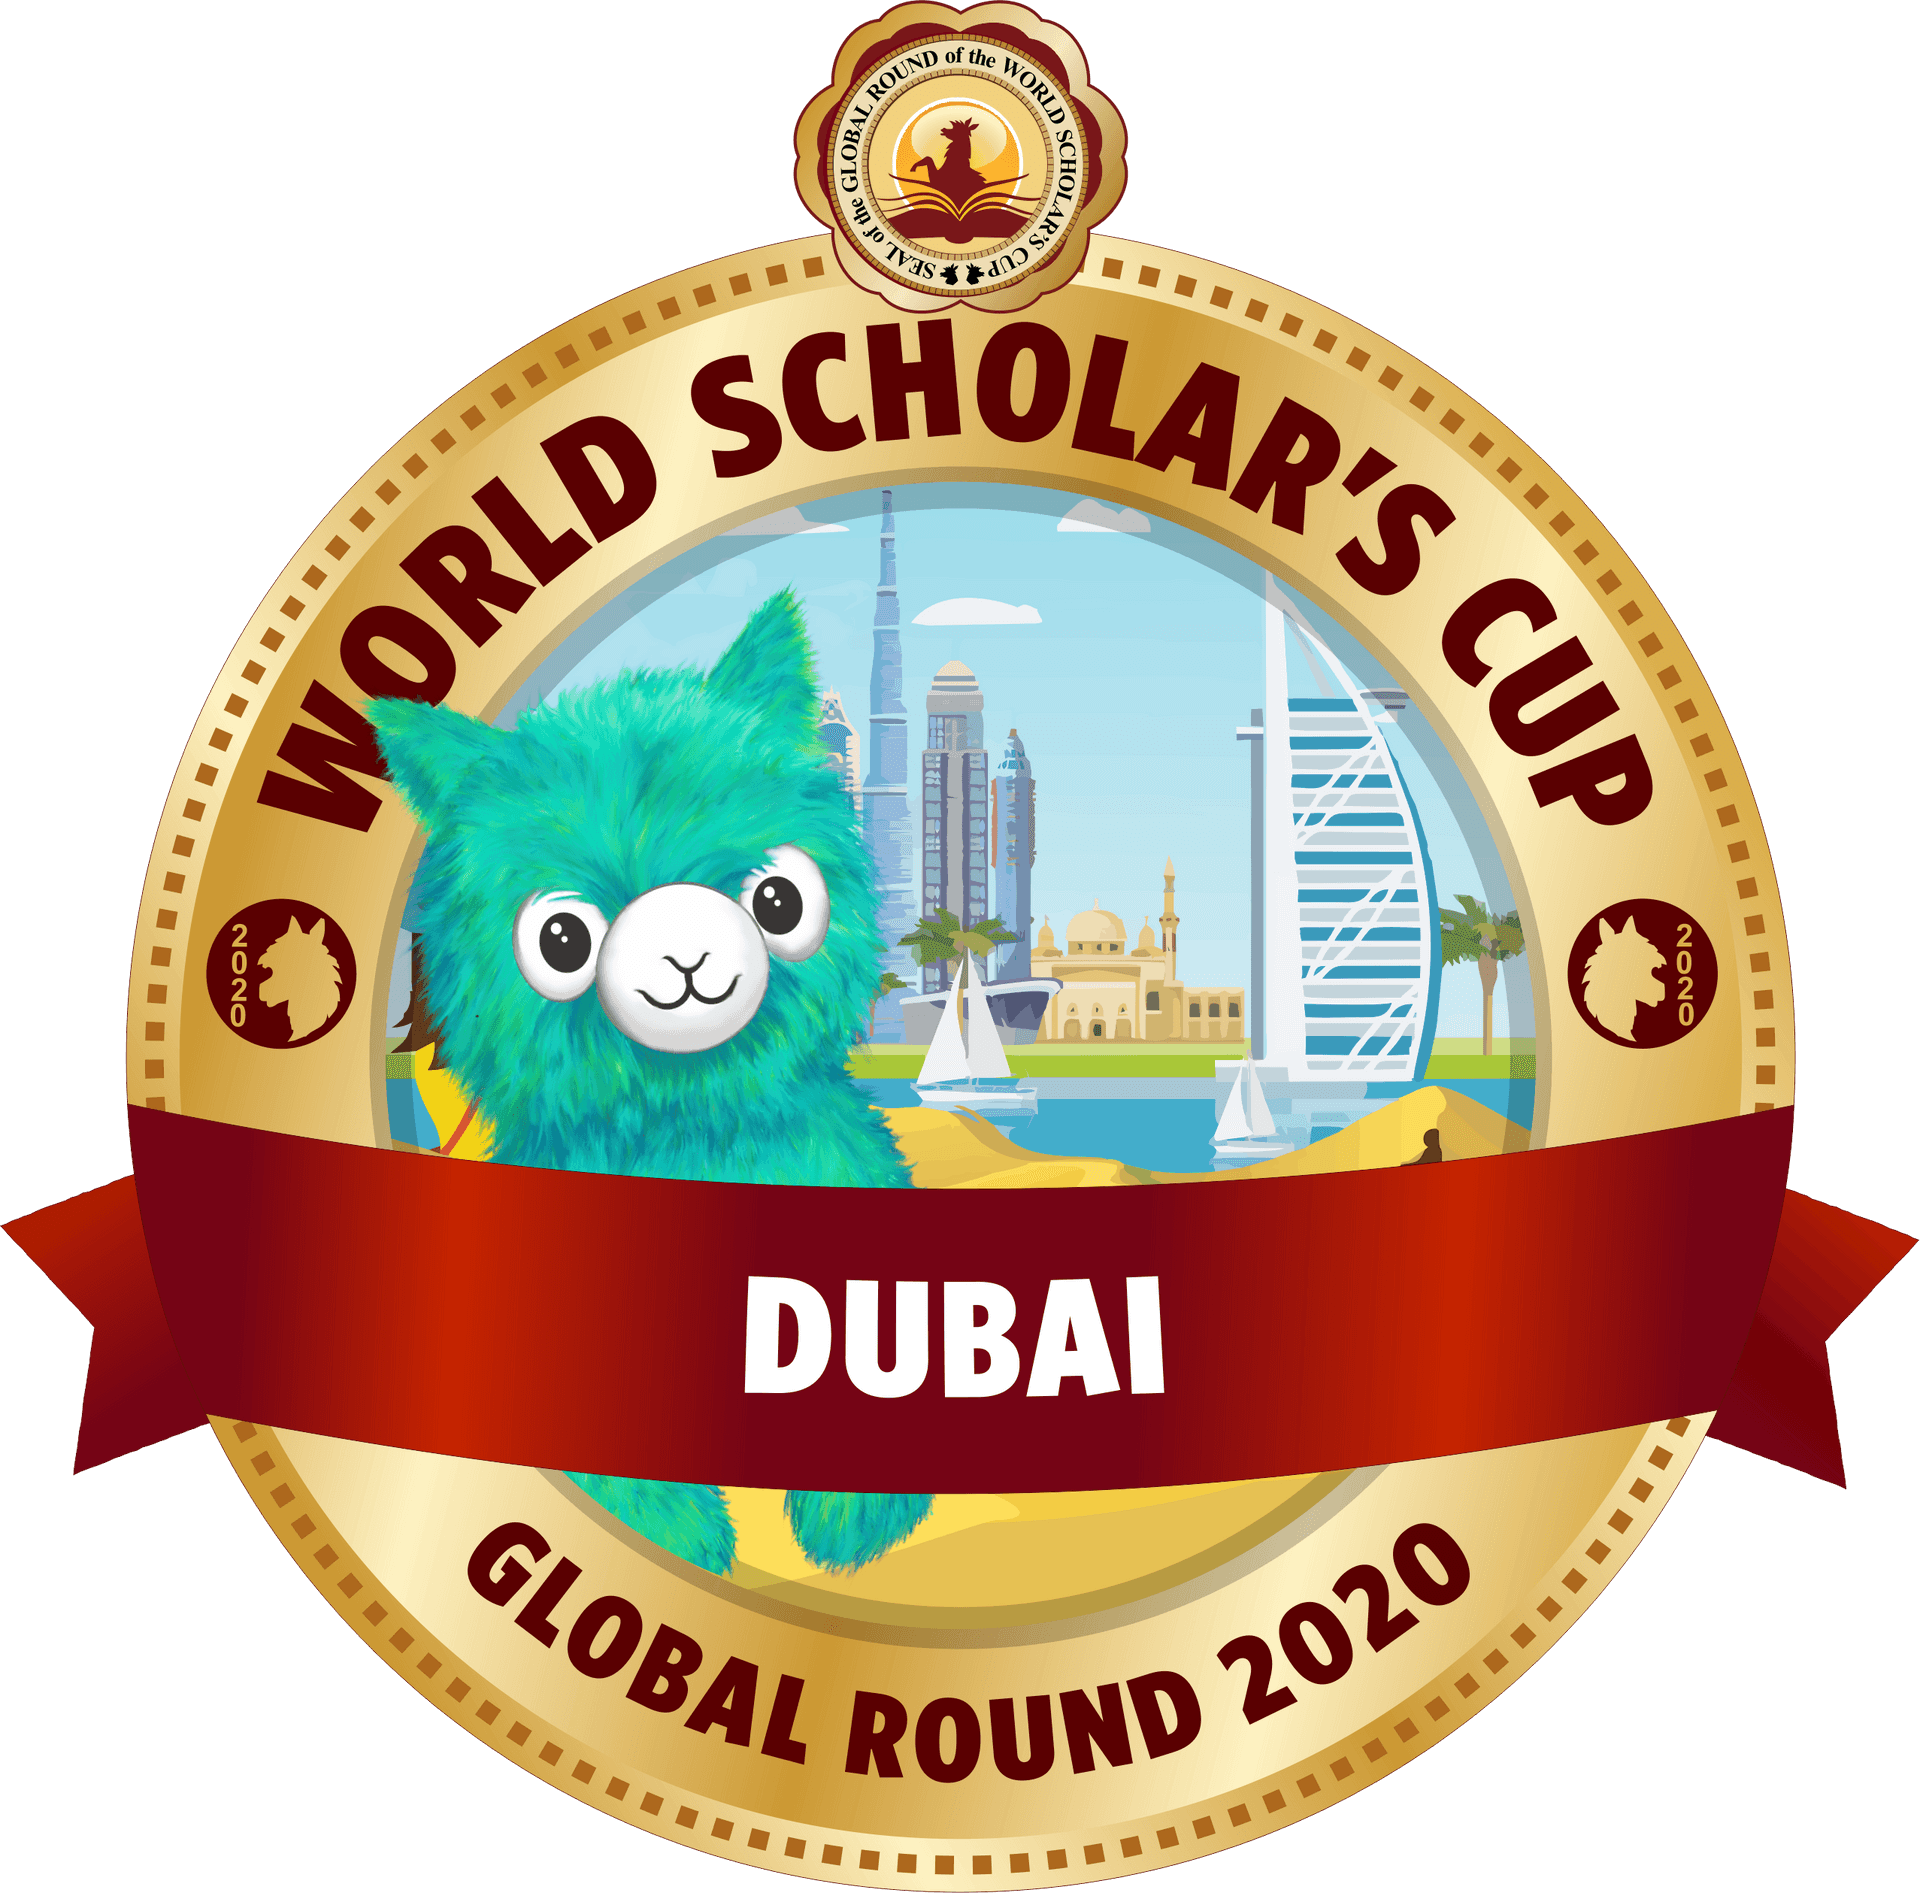 World Scholars Cup Dubai Global Round2020 Badge PNG image